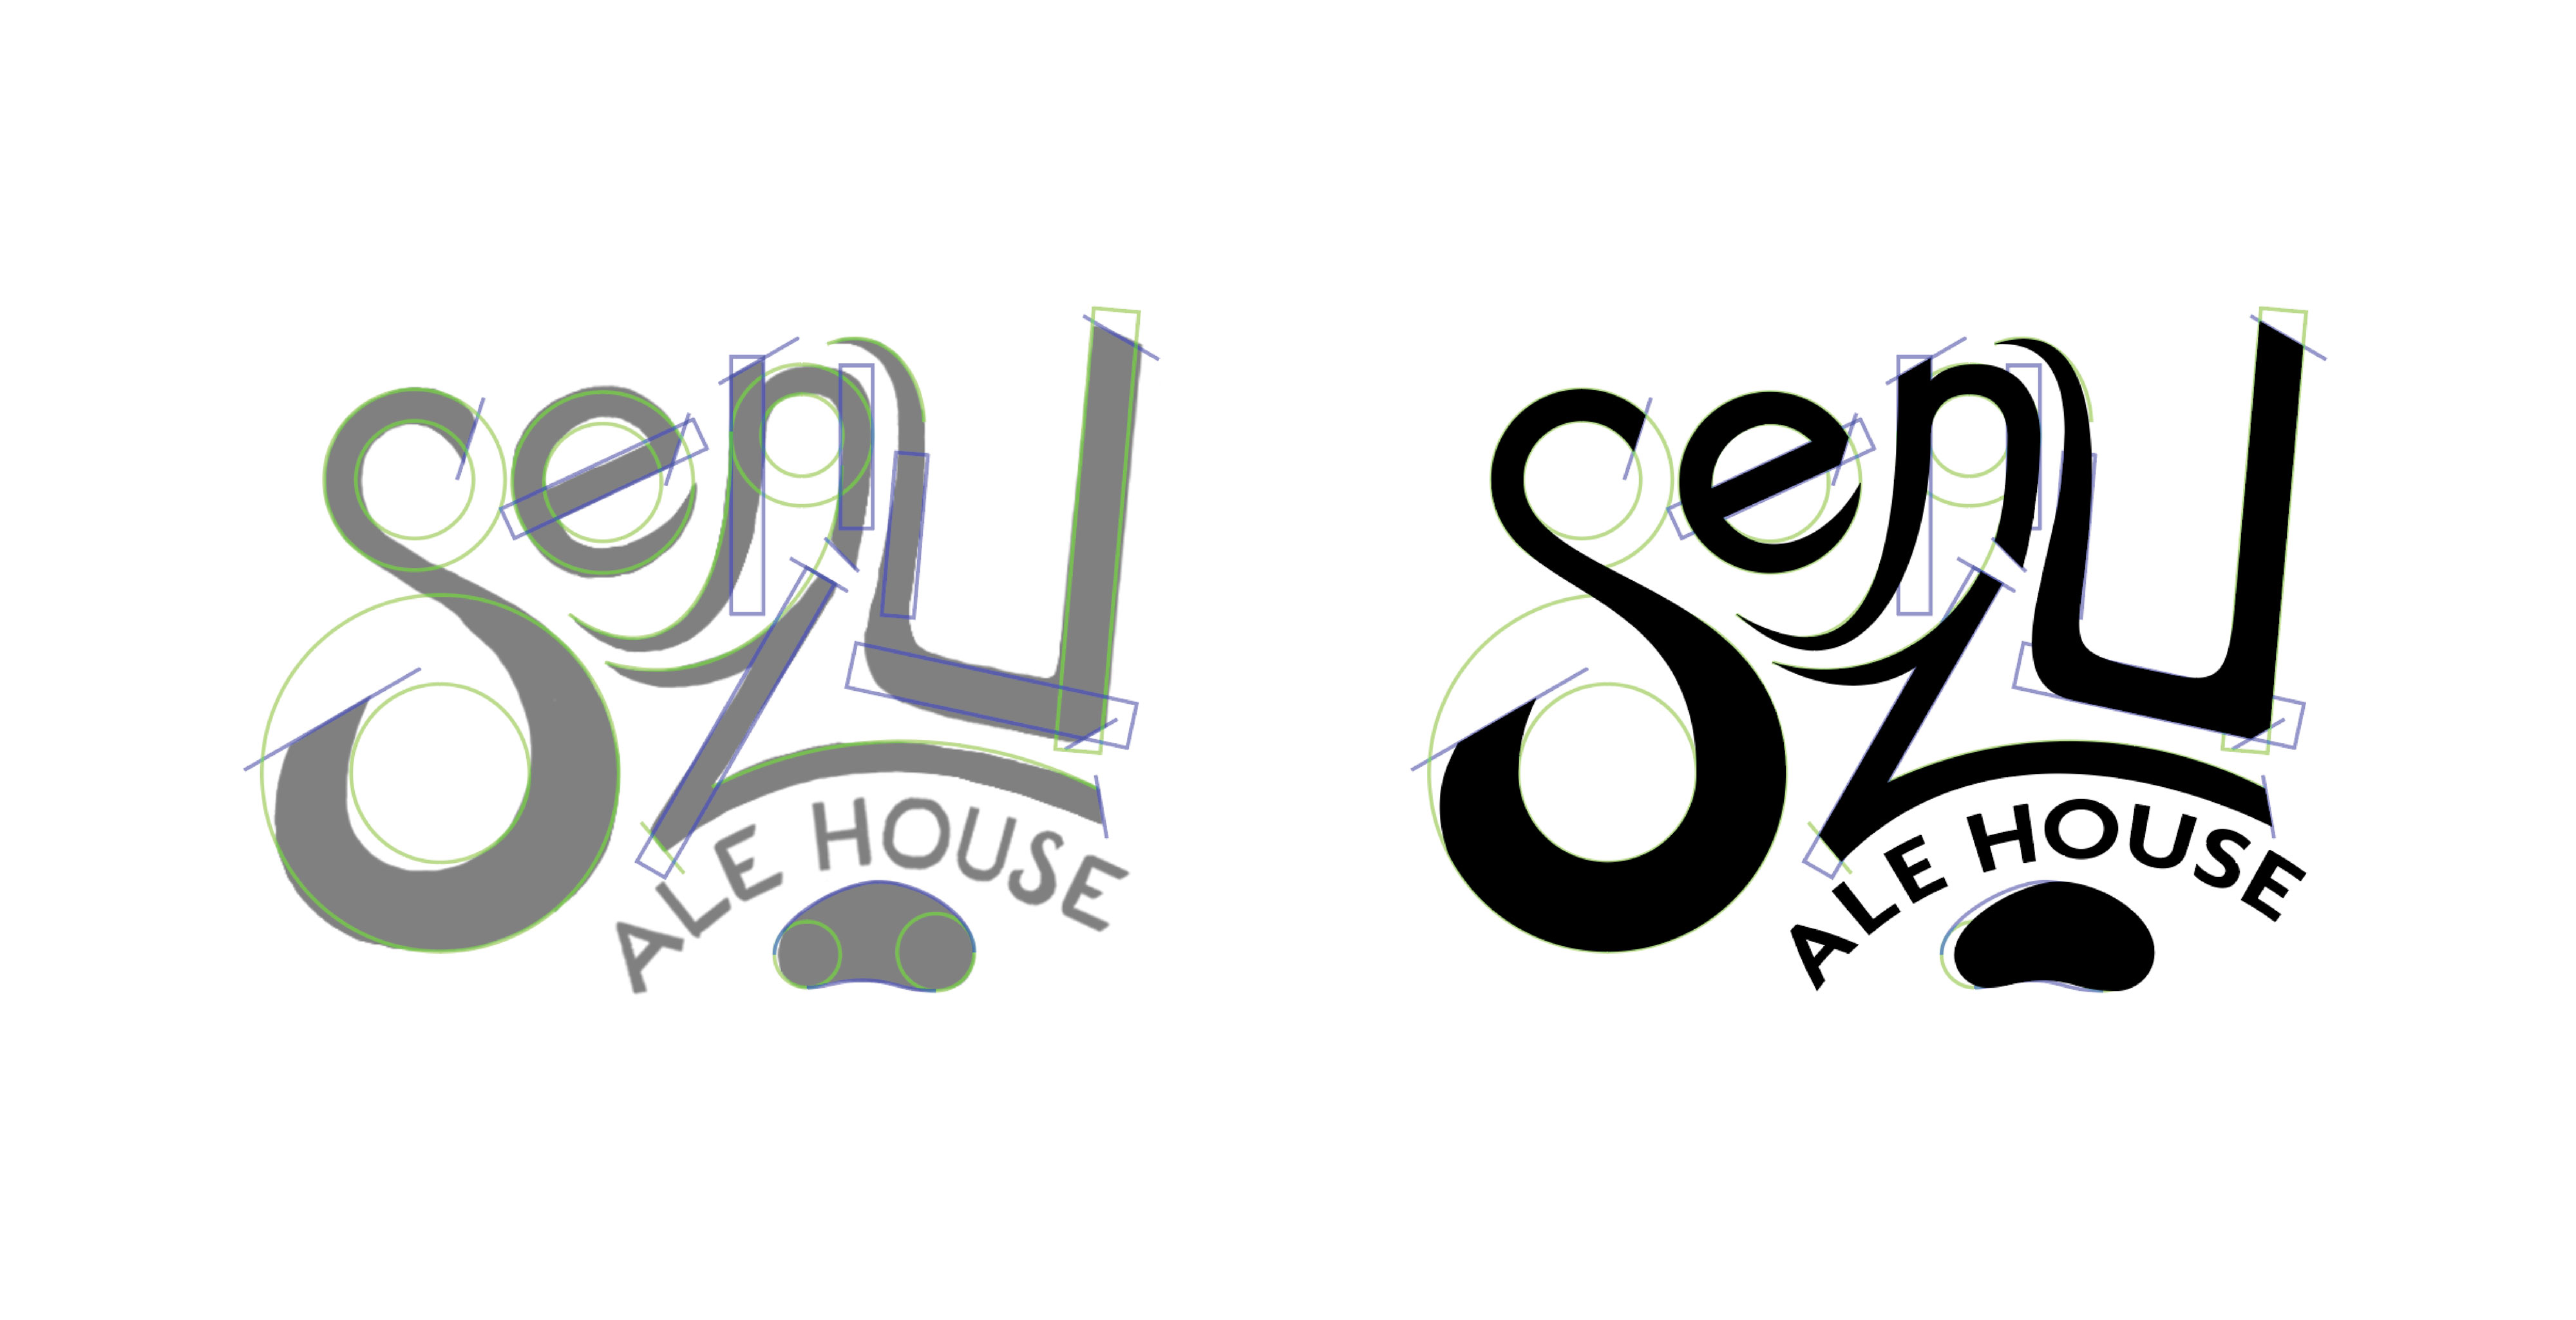 Senzu Ale House digitized logo